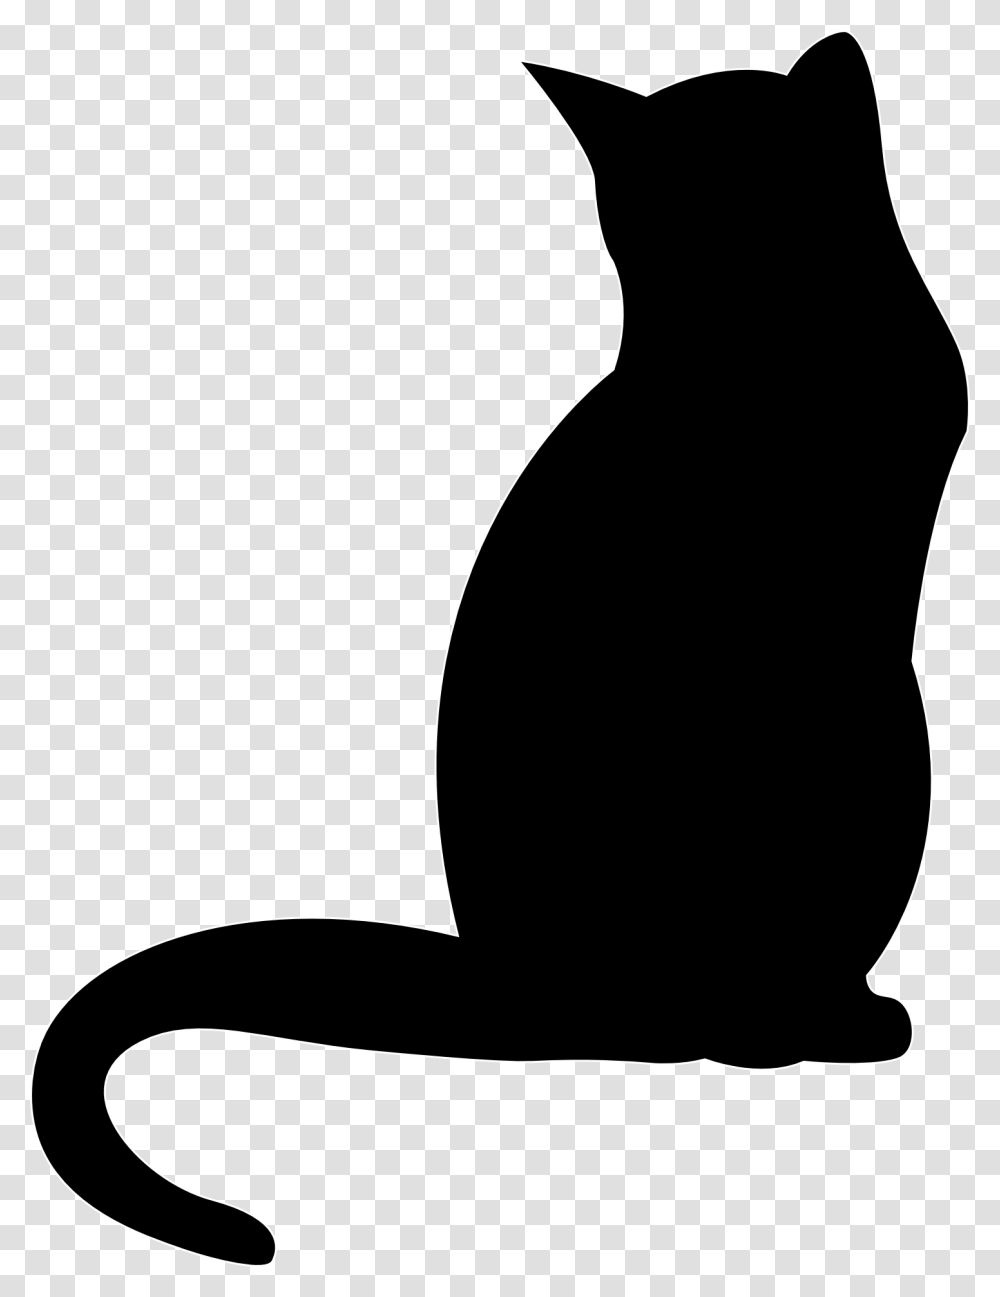 Black Cat Kitten Polydactyl Cat Clip Art Vector Black Cat, Silhouette, Pet, Animal, Baseball Cap Transparent Png